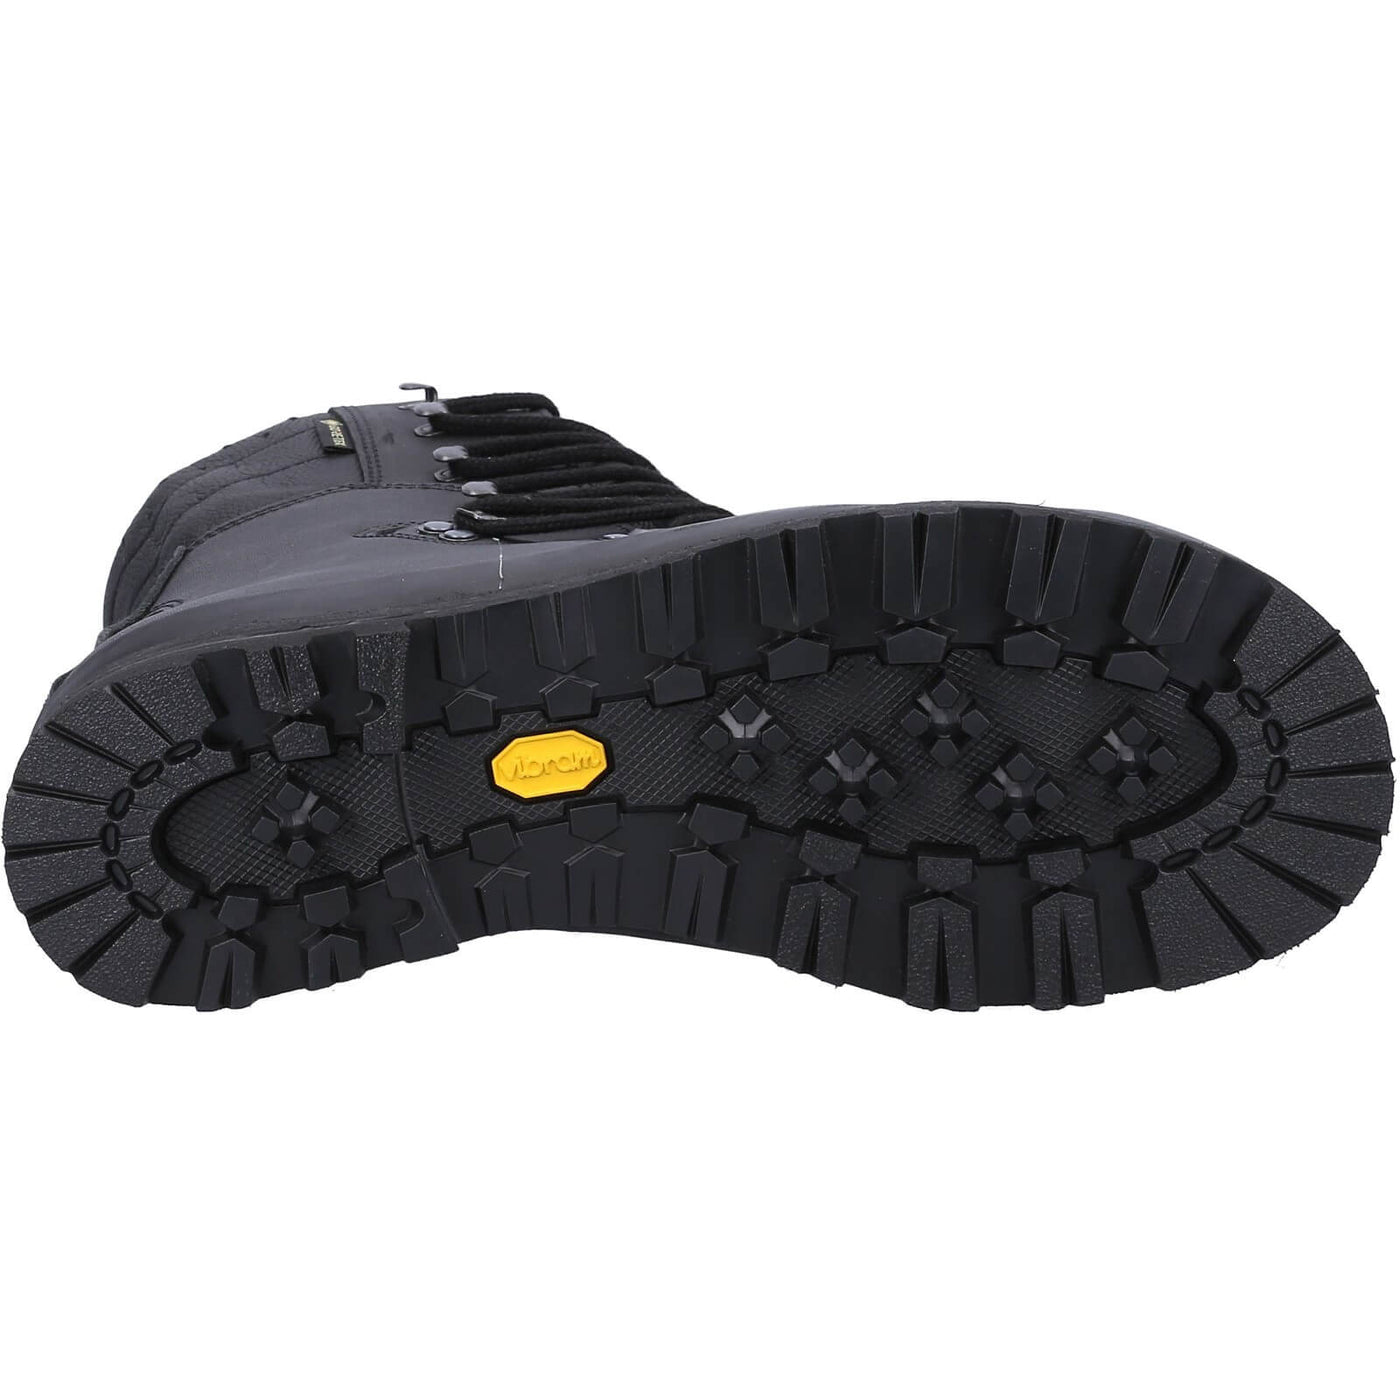 Haix Climber Safety Boots Black 3#colour_black